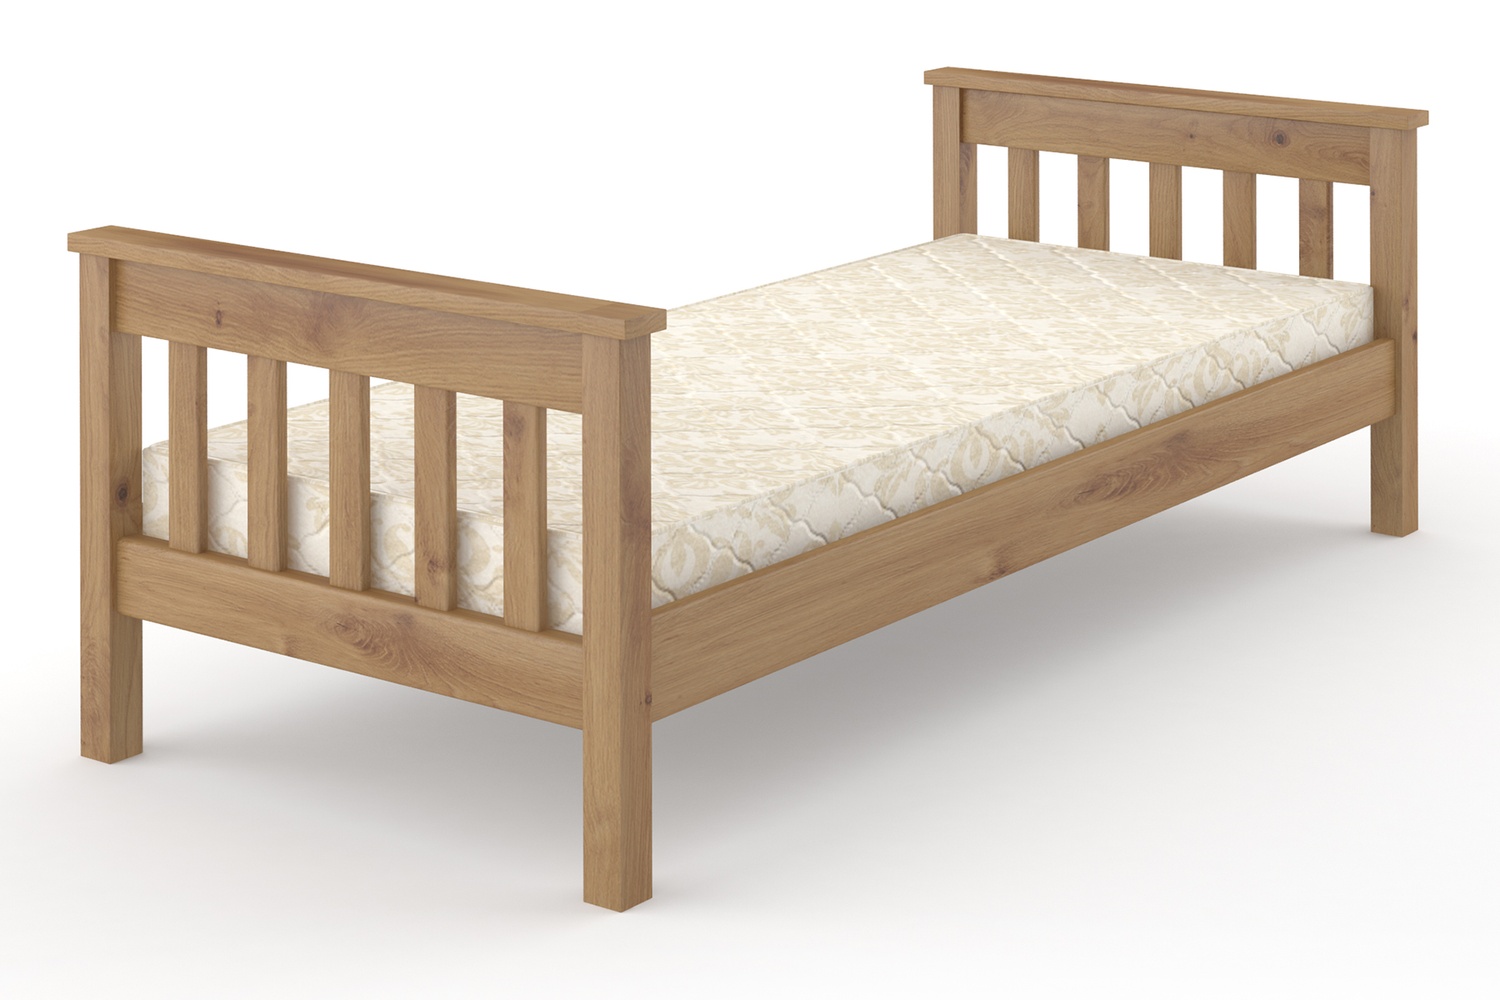 Кровать односпальная Санта-Фе Литл (Skandynaviya) 80х190 см skndnv-ltl-80x190f фото